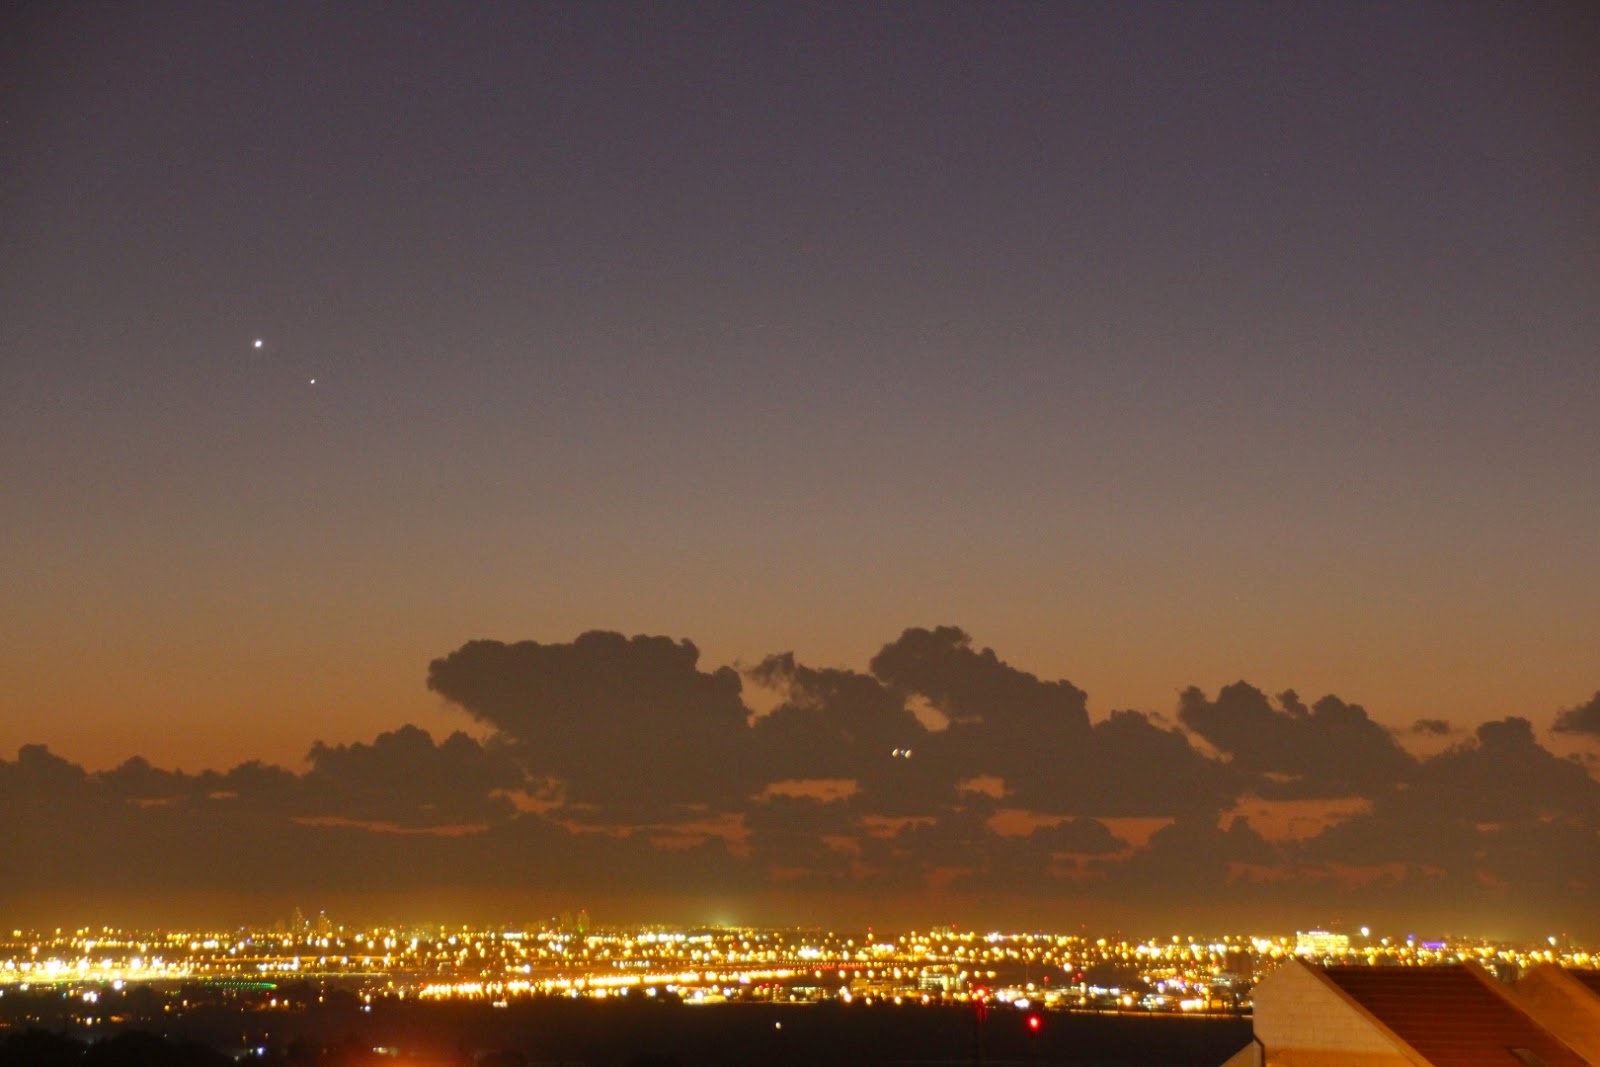 Venus, Mercury and an airplane taking off